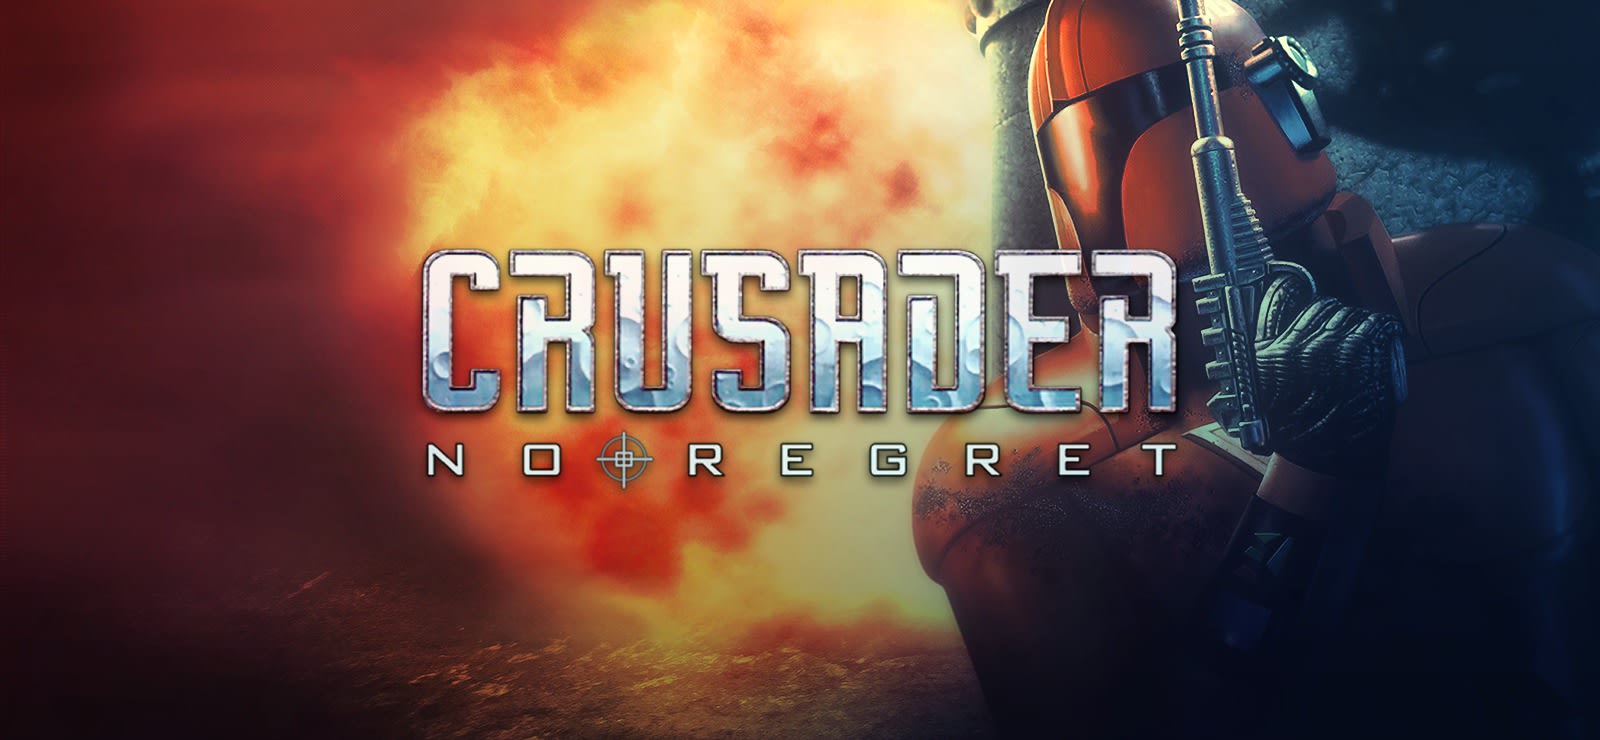 download crusader no remorse windows 10